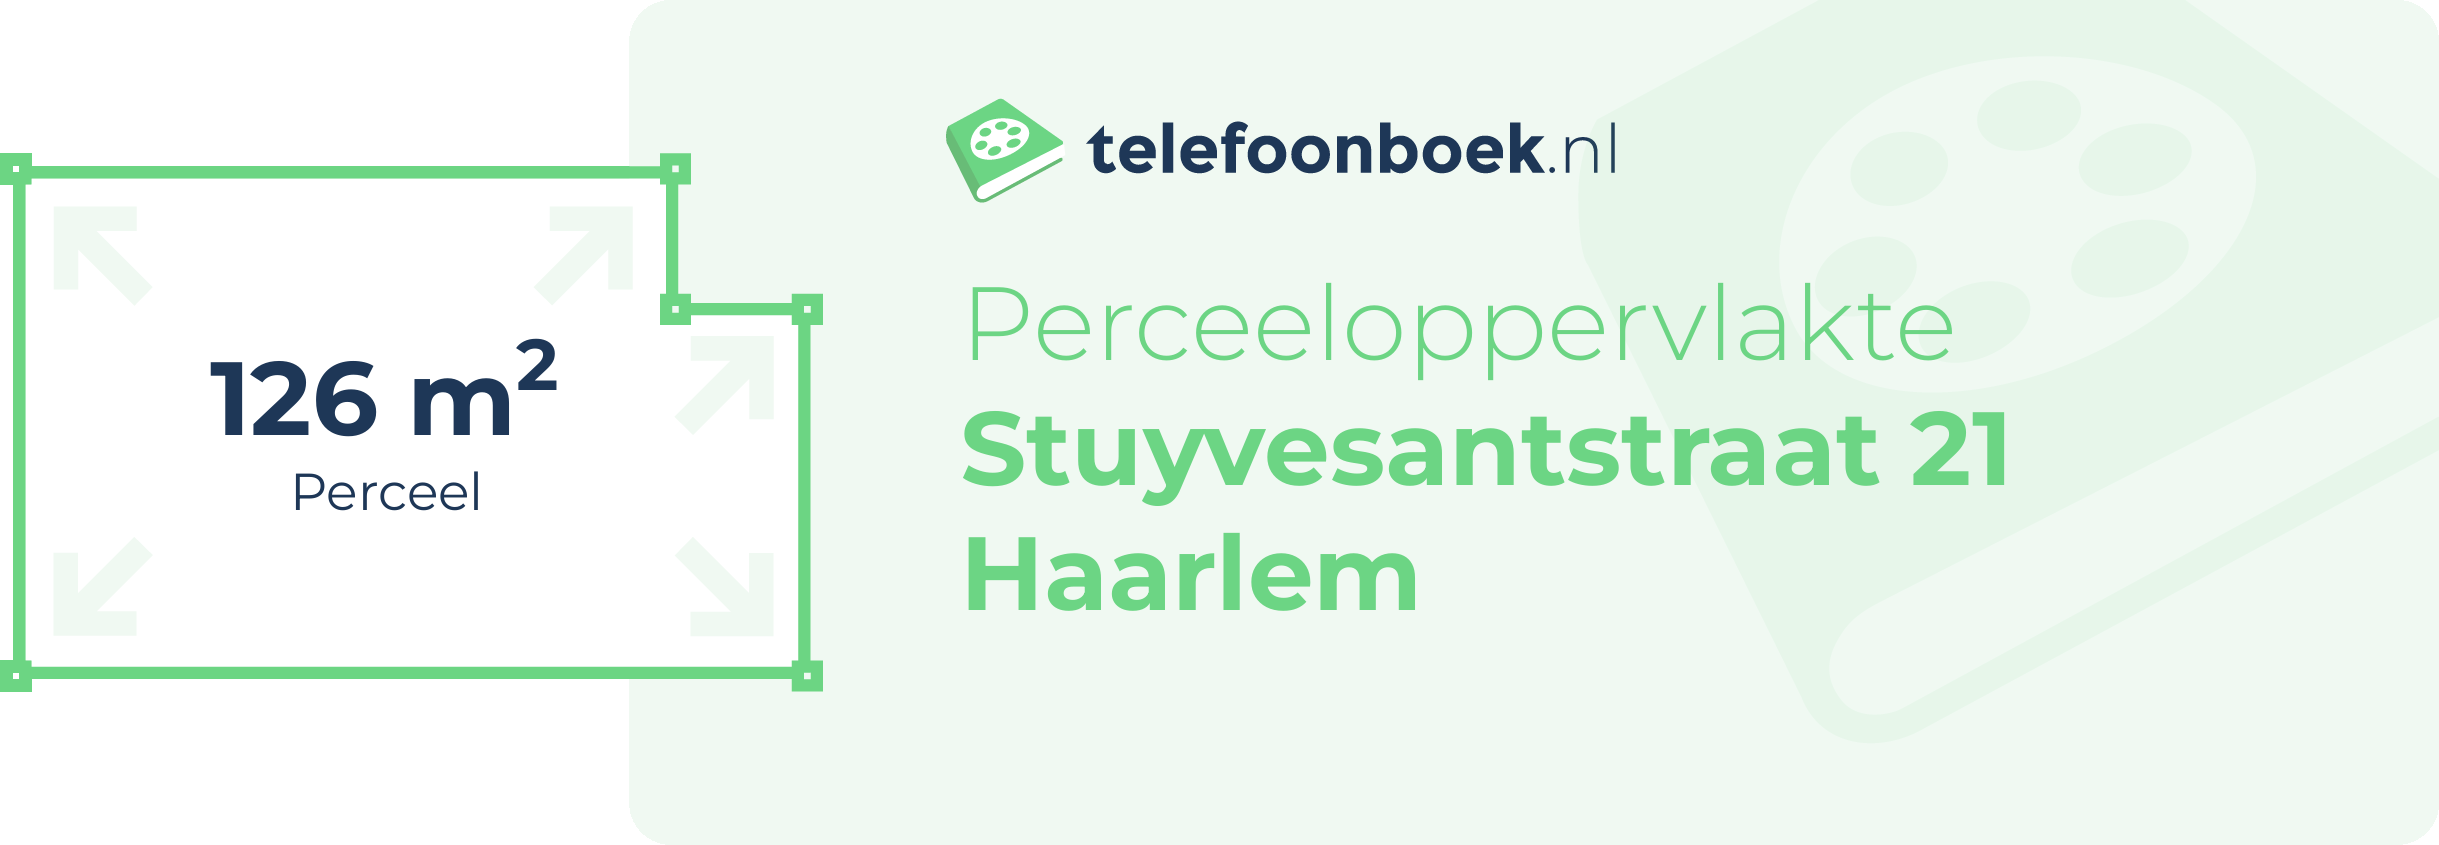 Perceeloppervlakte Stuyvesantstraat 21 Haarlem